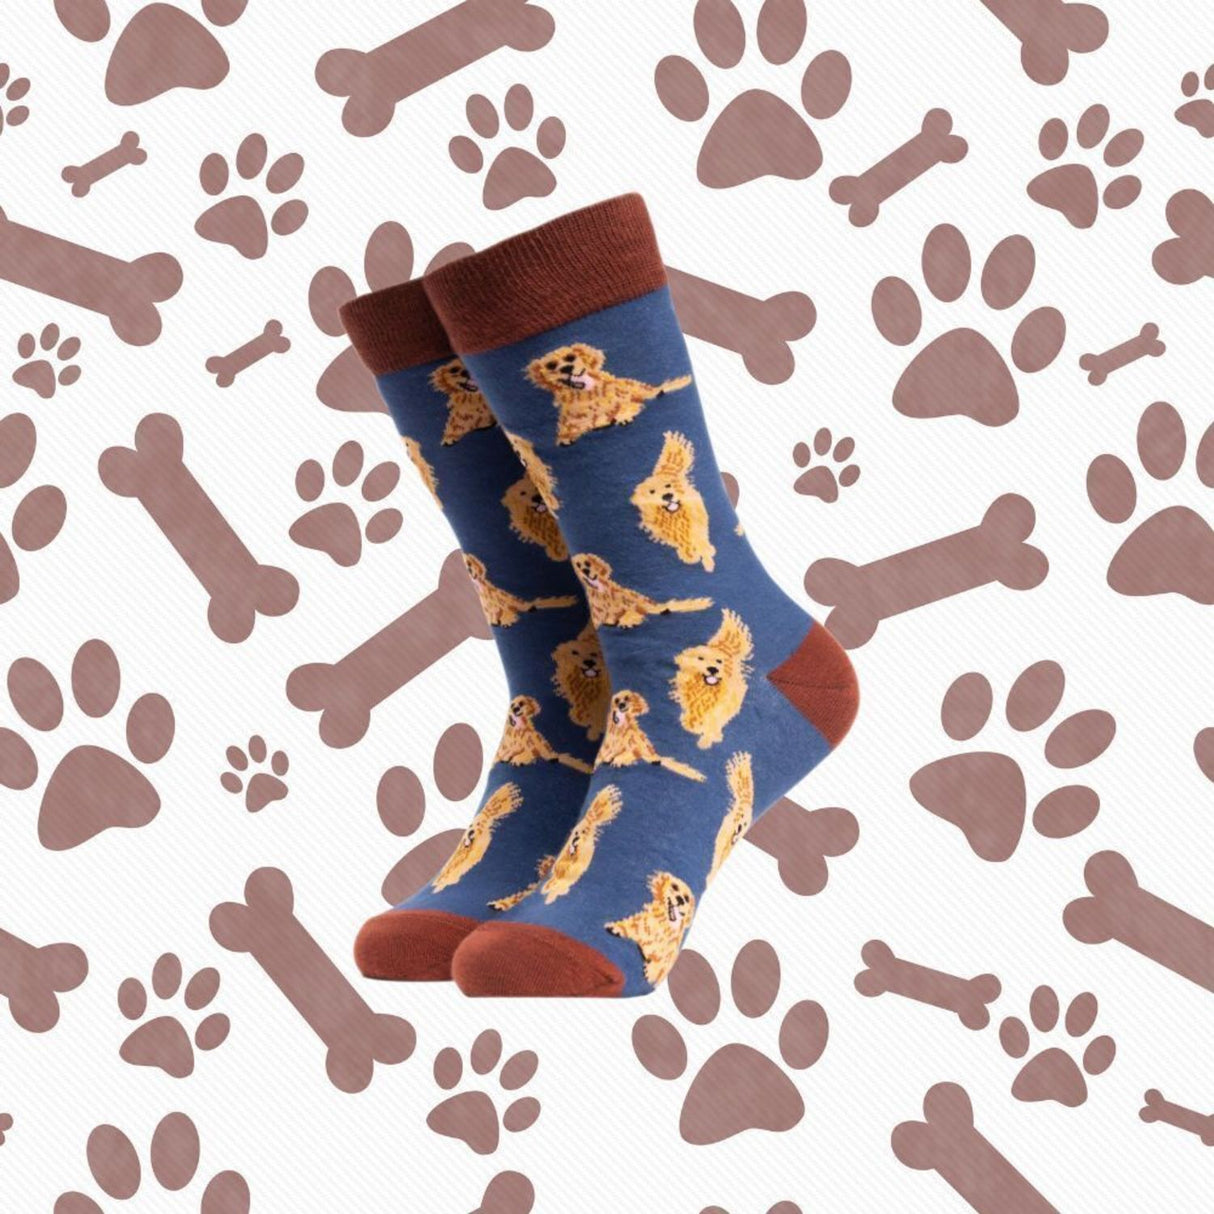 Golden Retriever Hund Soctopus Socken in 43-46 im Paar